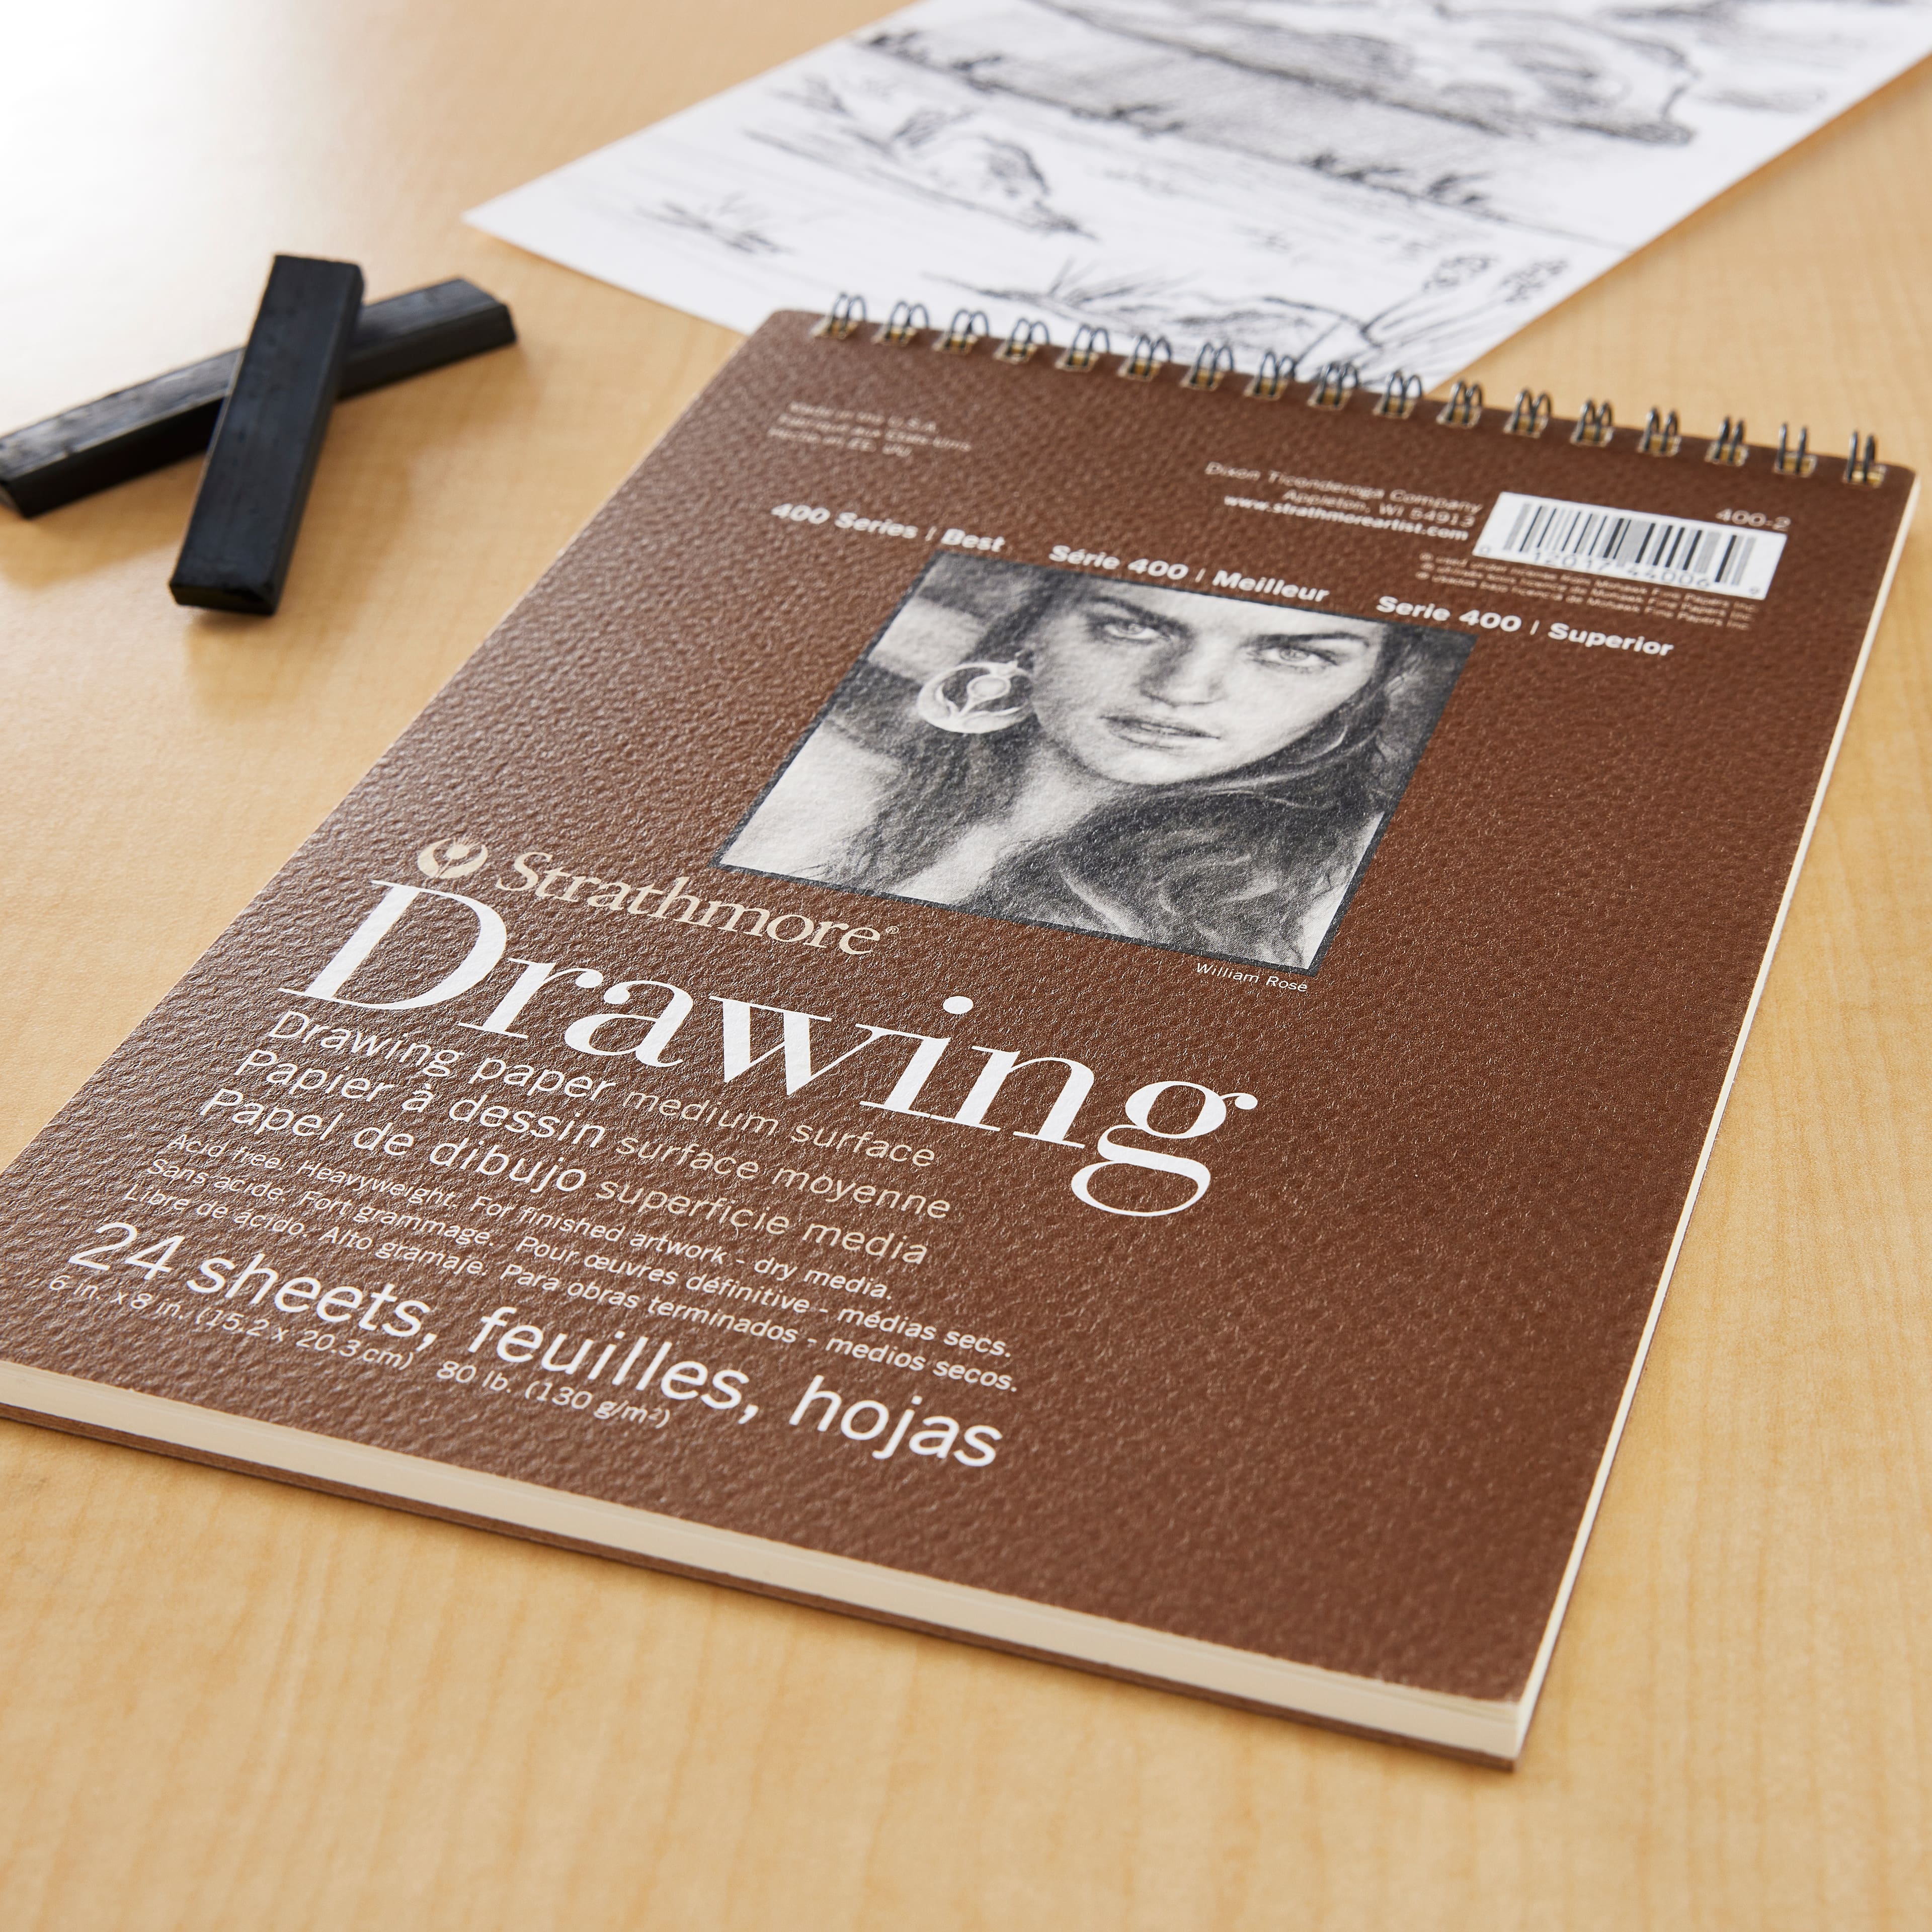 Strathmore 400 Series Drawing Paper Medium, 24 Sheets, 80lb 18 x 24 Art  Pad